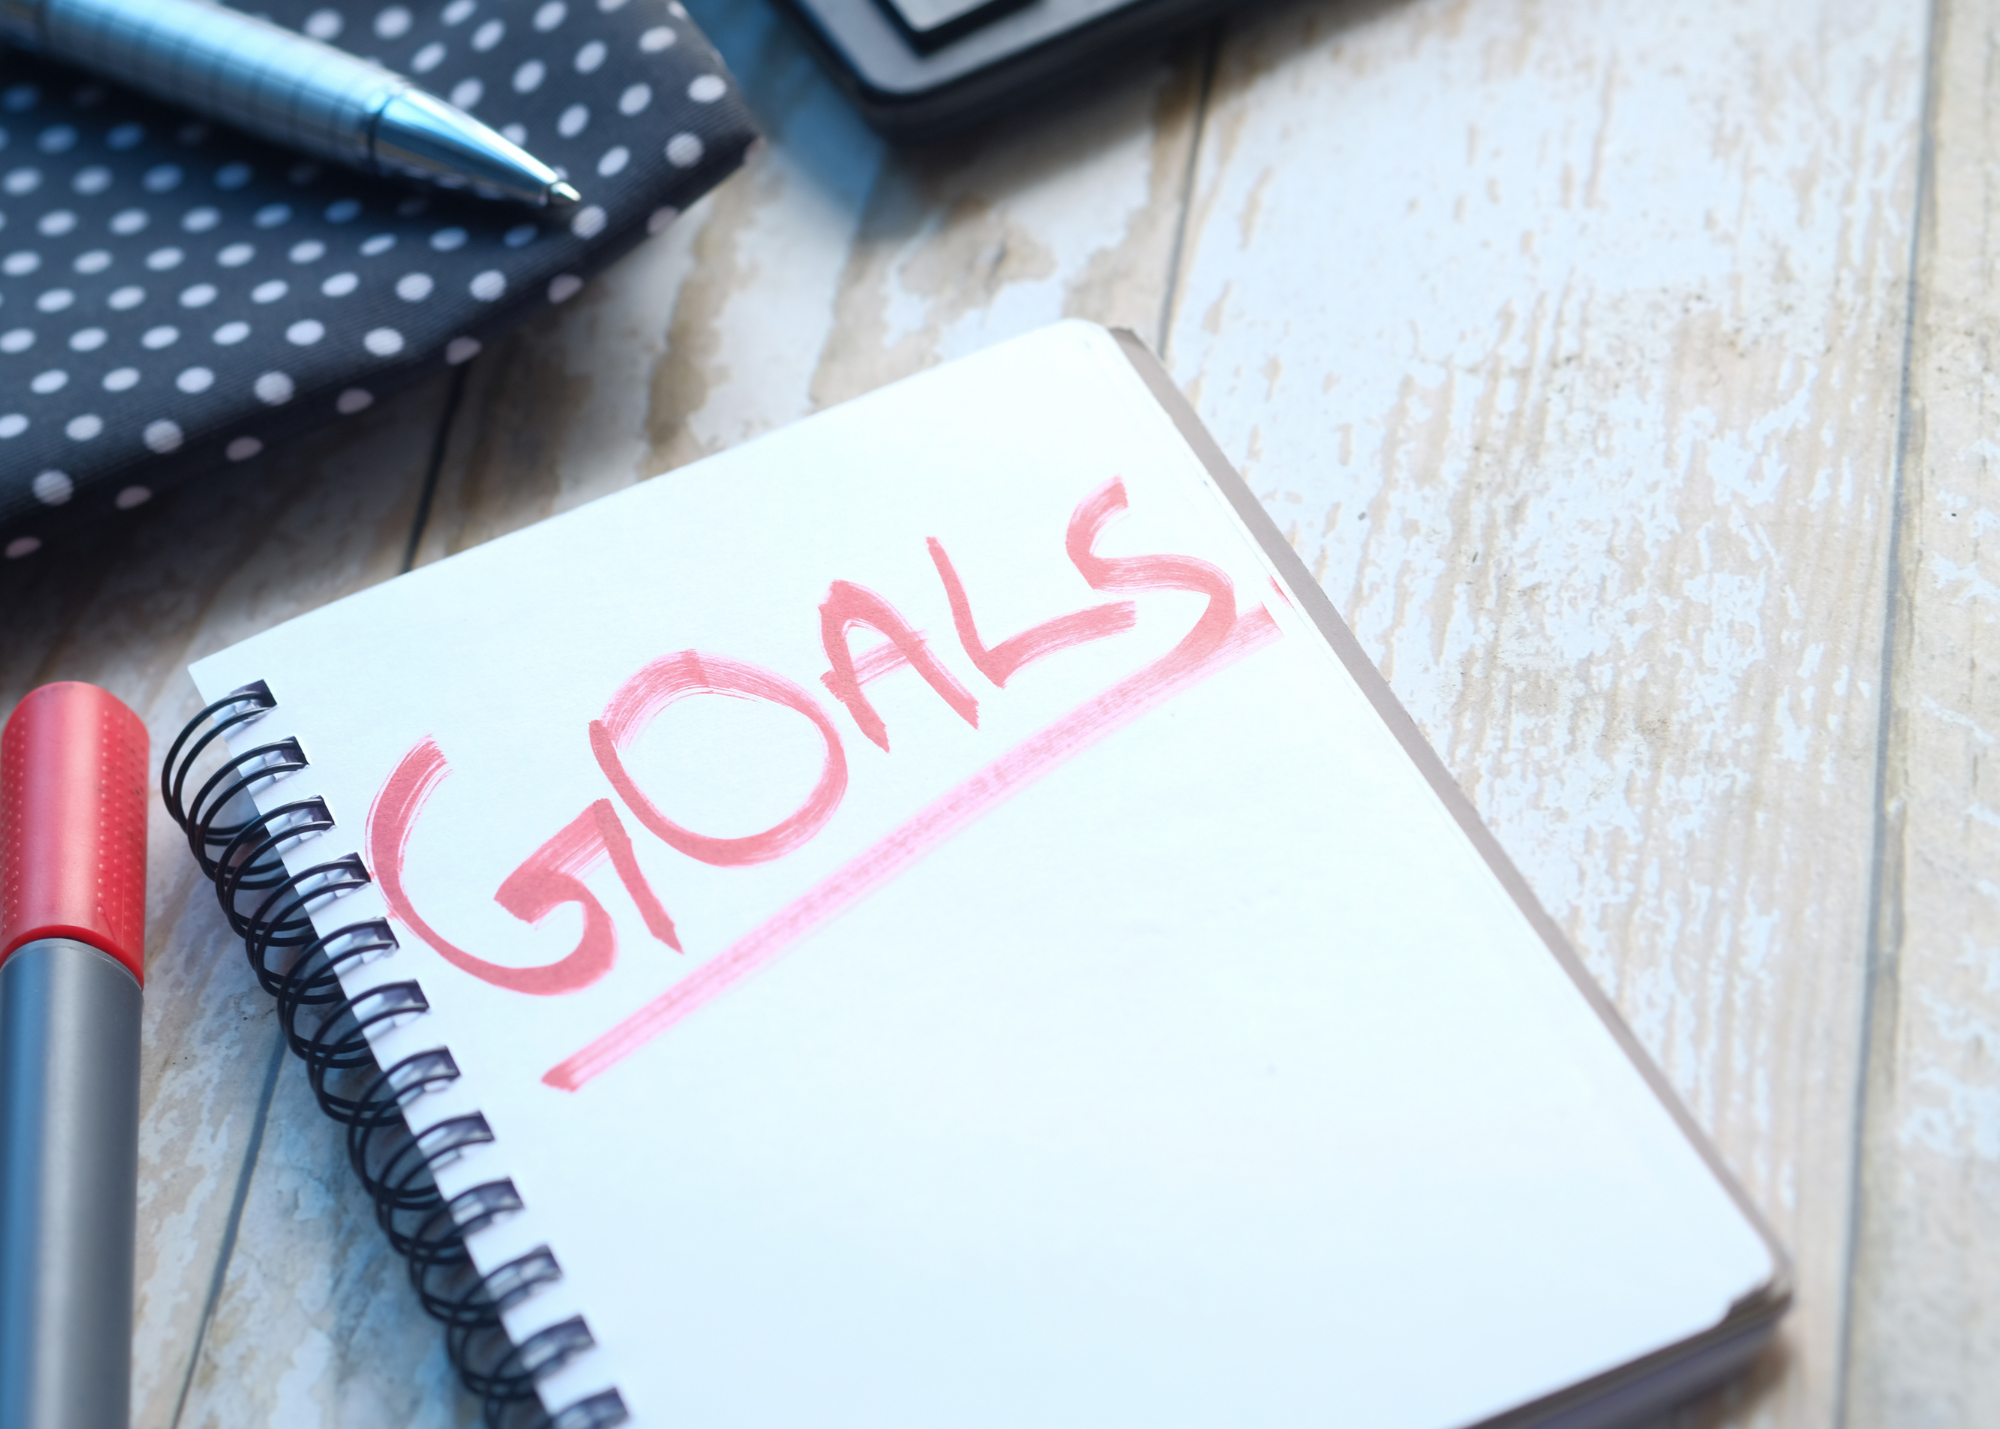 Achieve your goals through healthy habits